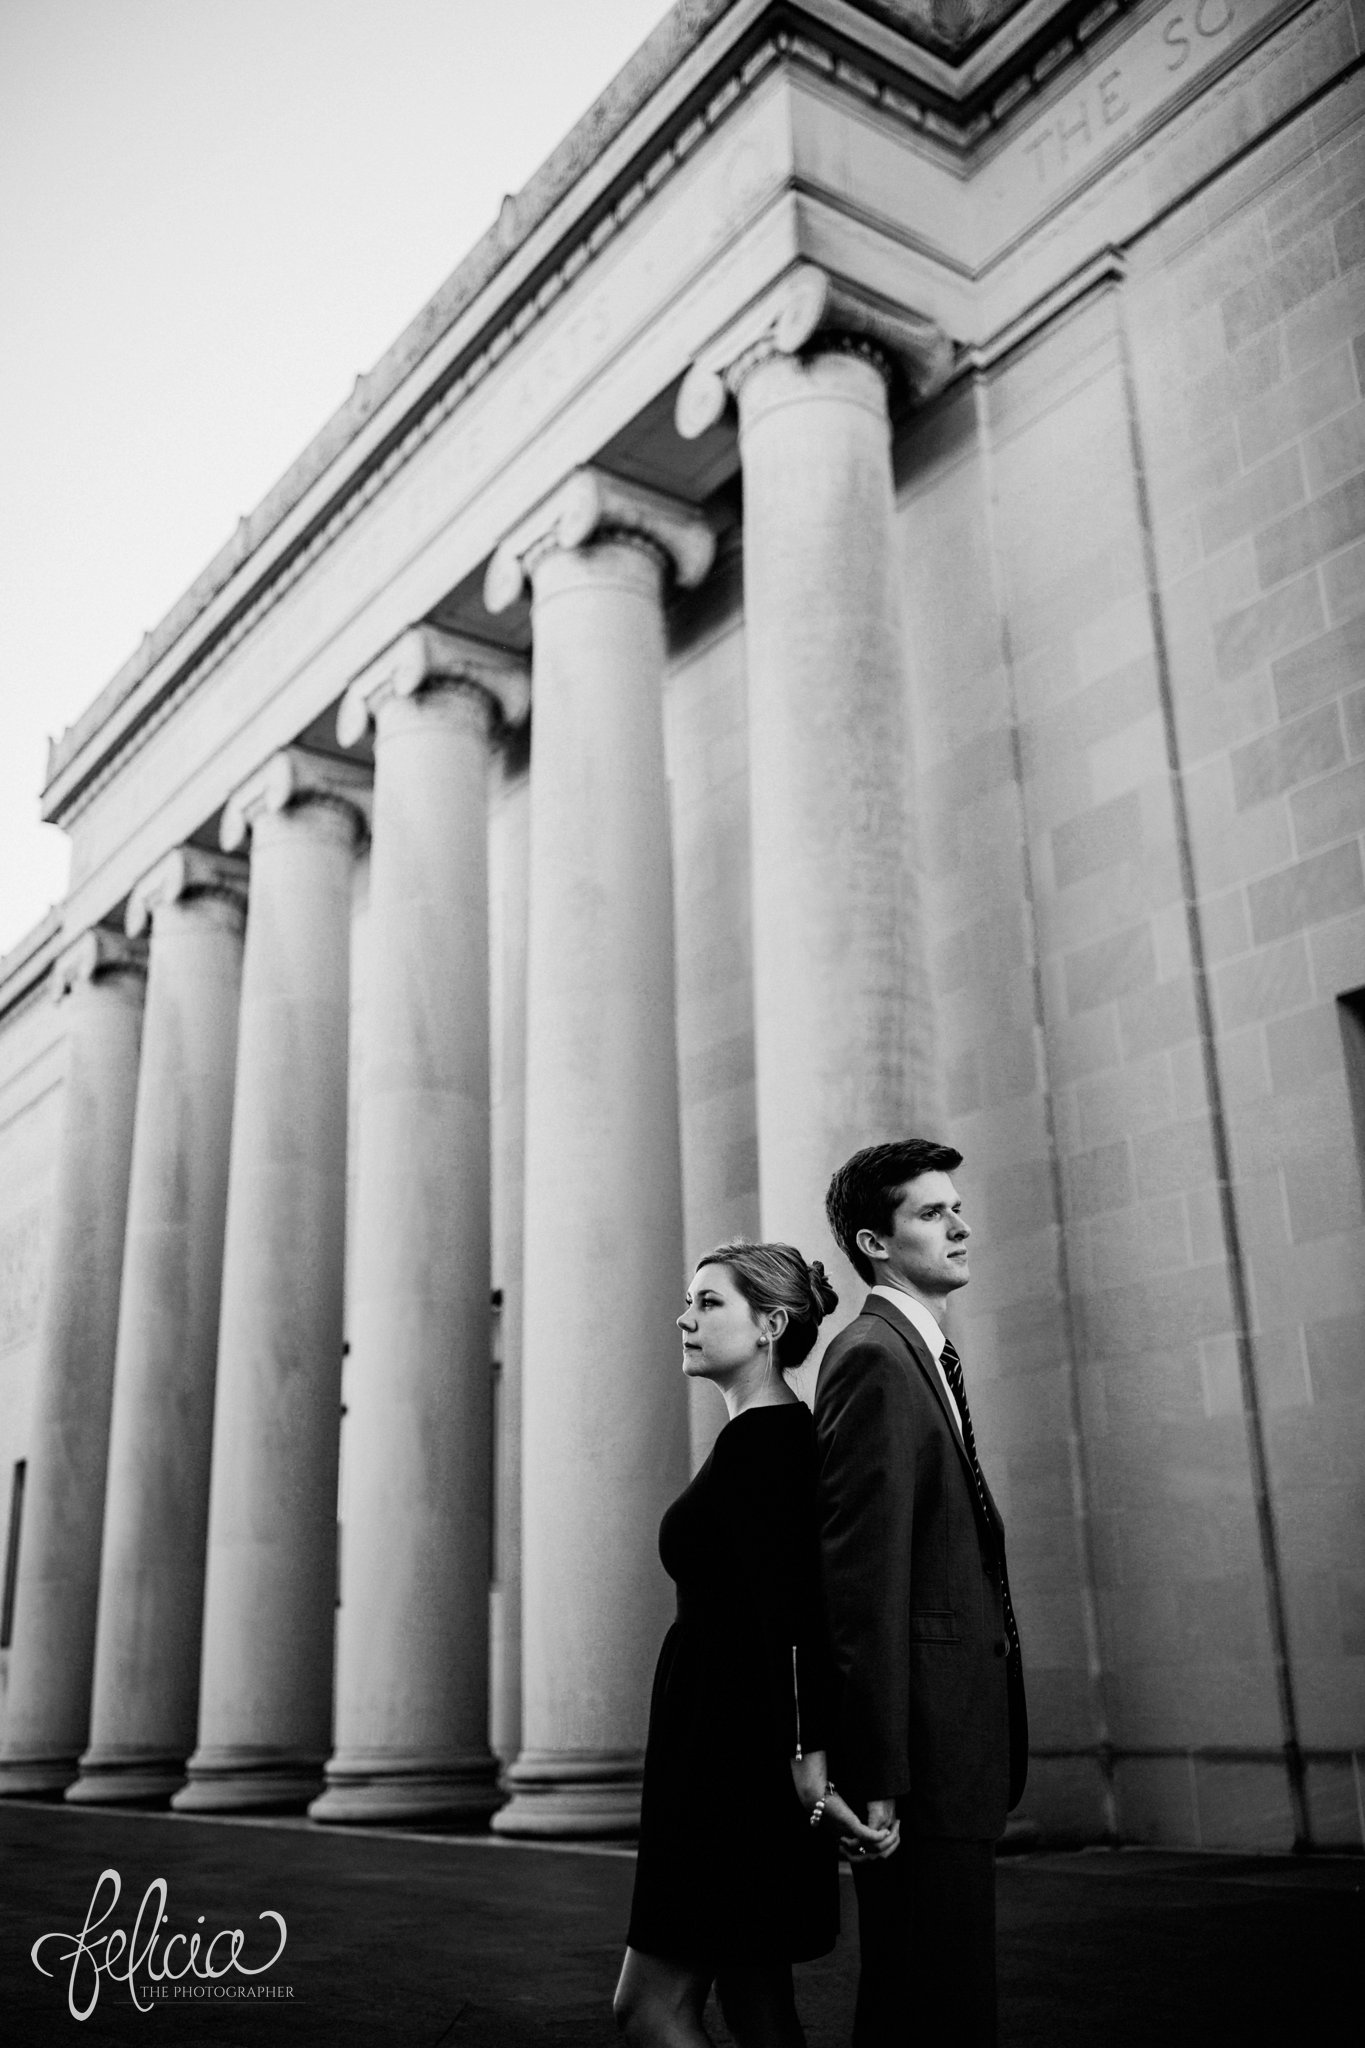 images by feliciathephotographer.com | wedding photographer | kansas city missouri | engagement | black and white | contrast | true love | classy | elegant | nelson atkins | 